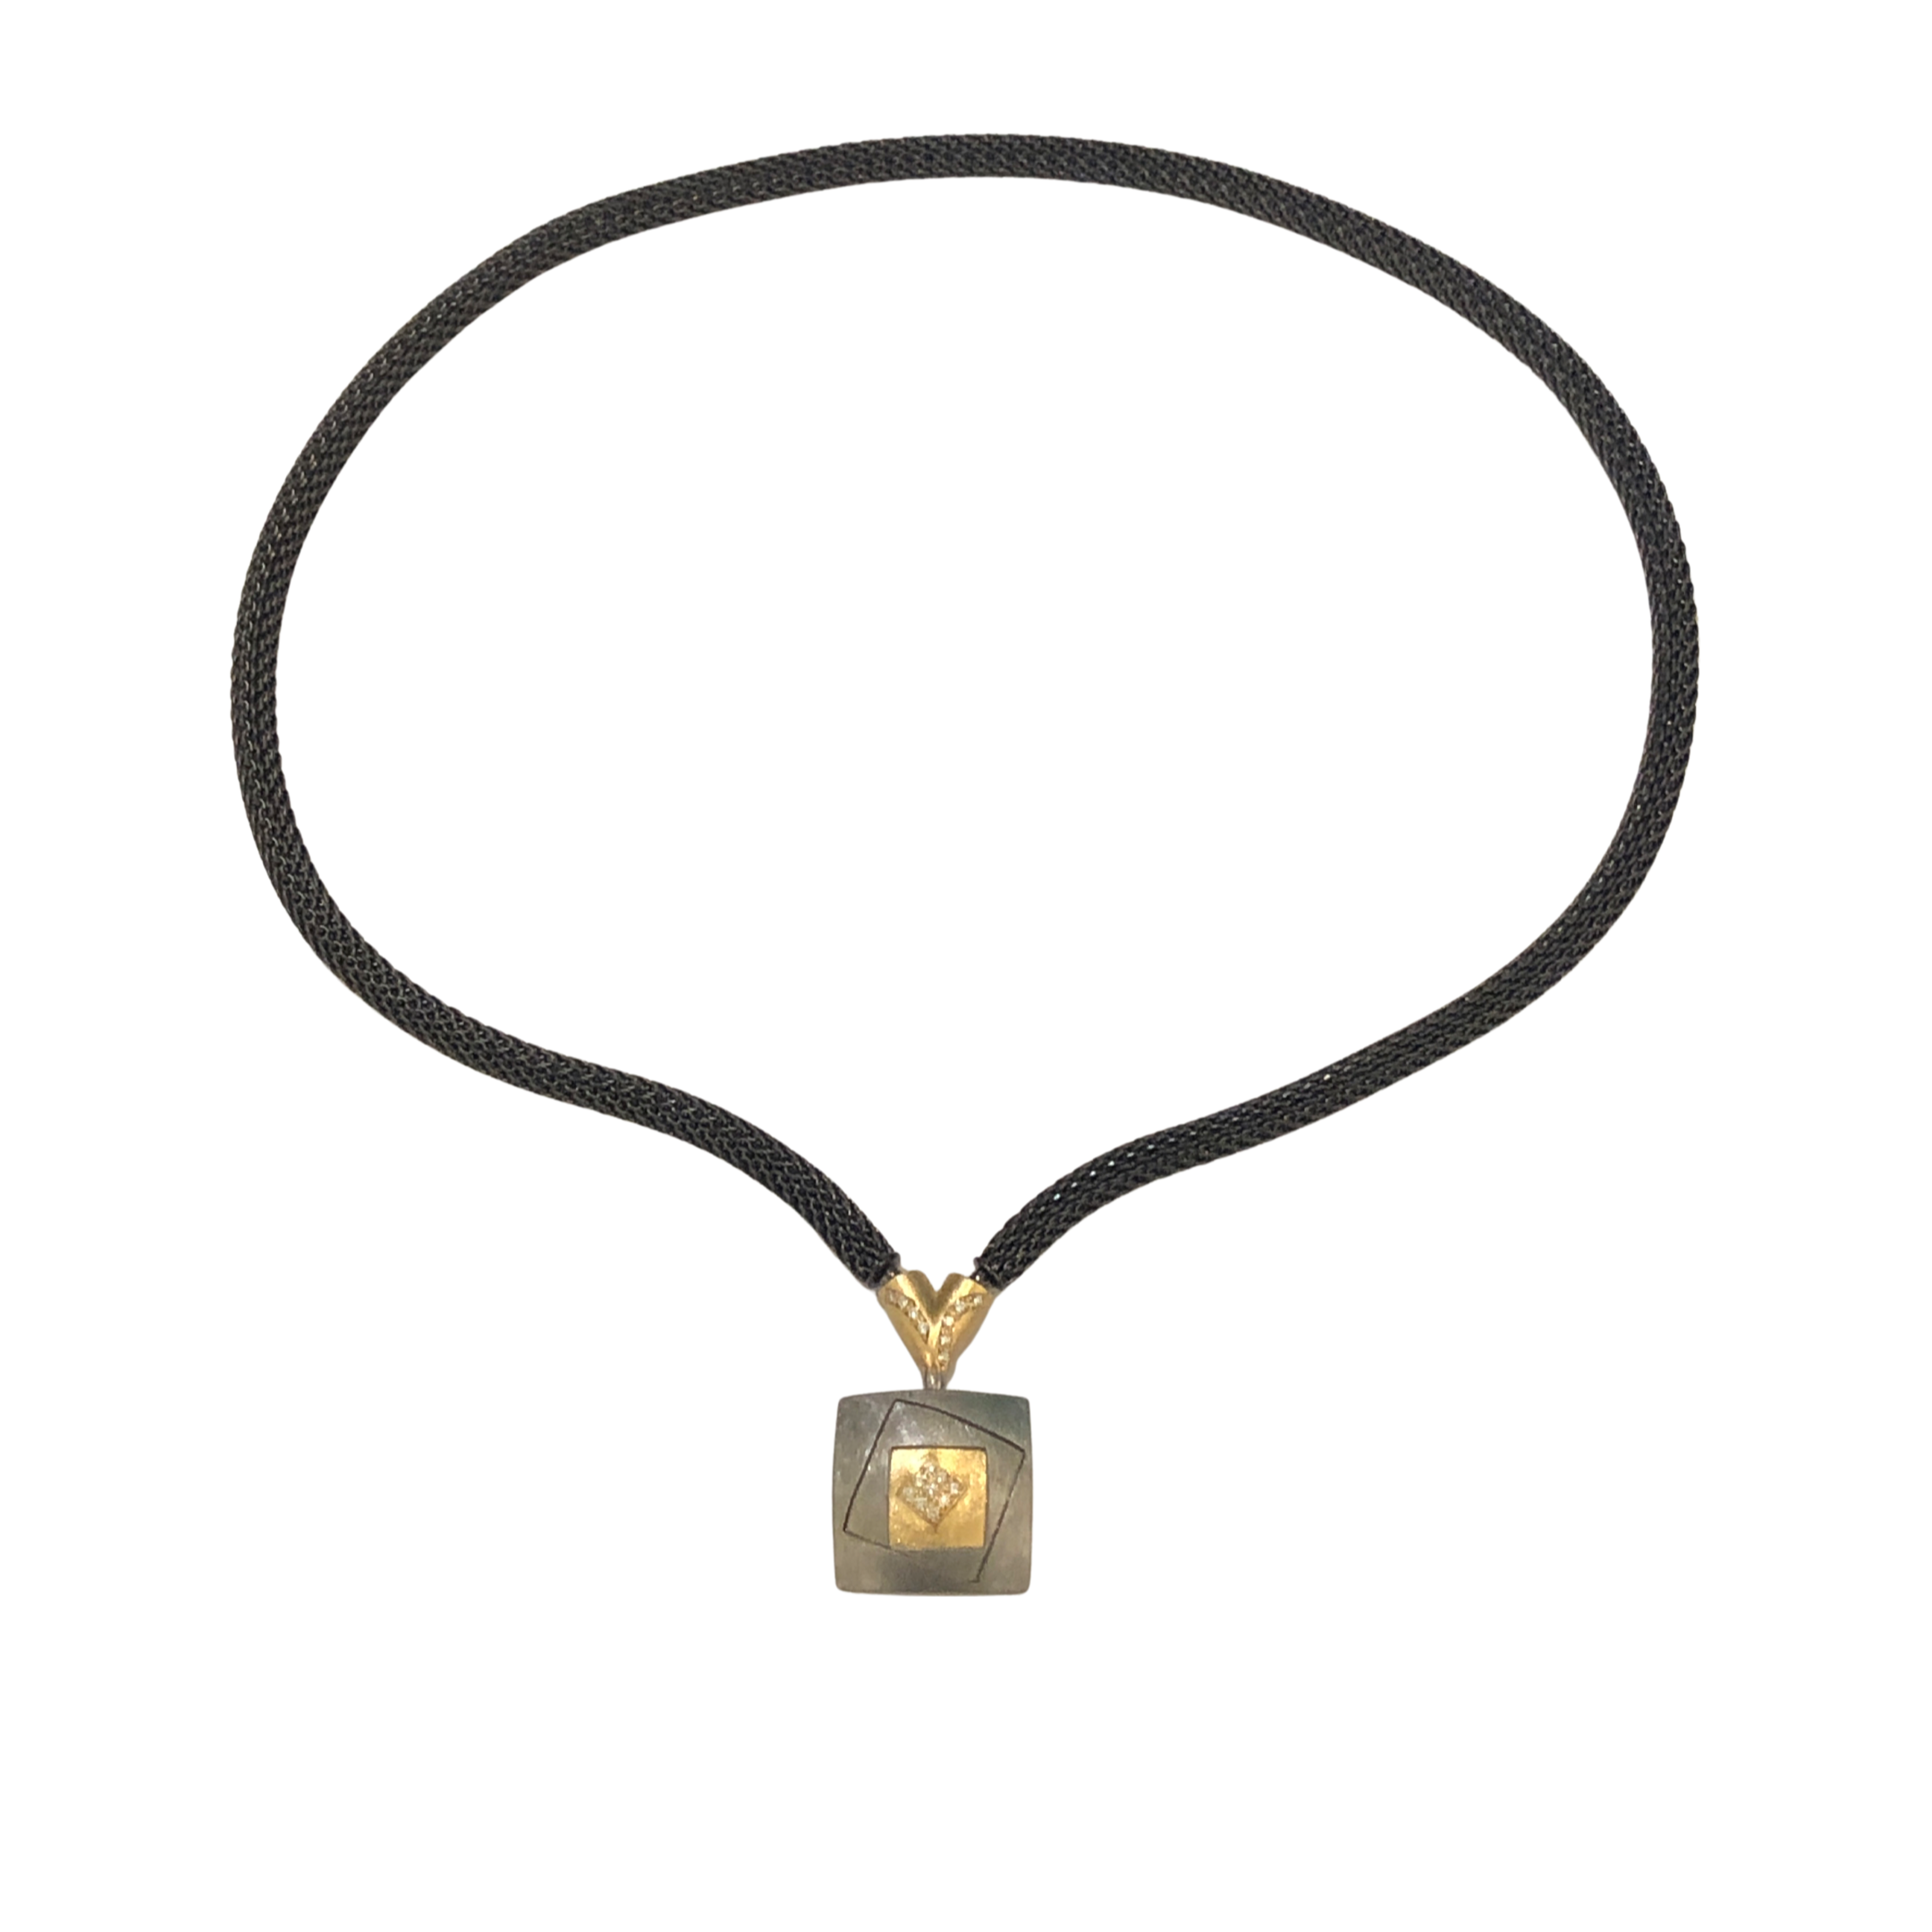 Diamond Square Pendant with Y shape Diamond Connector on 18 Black